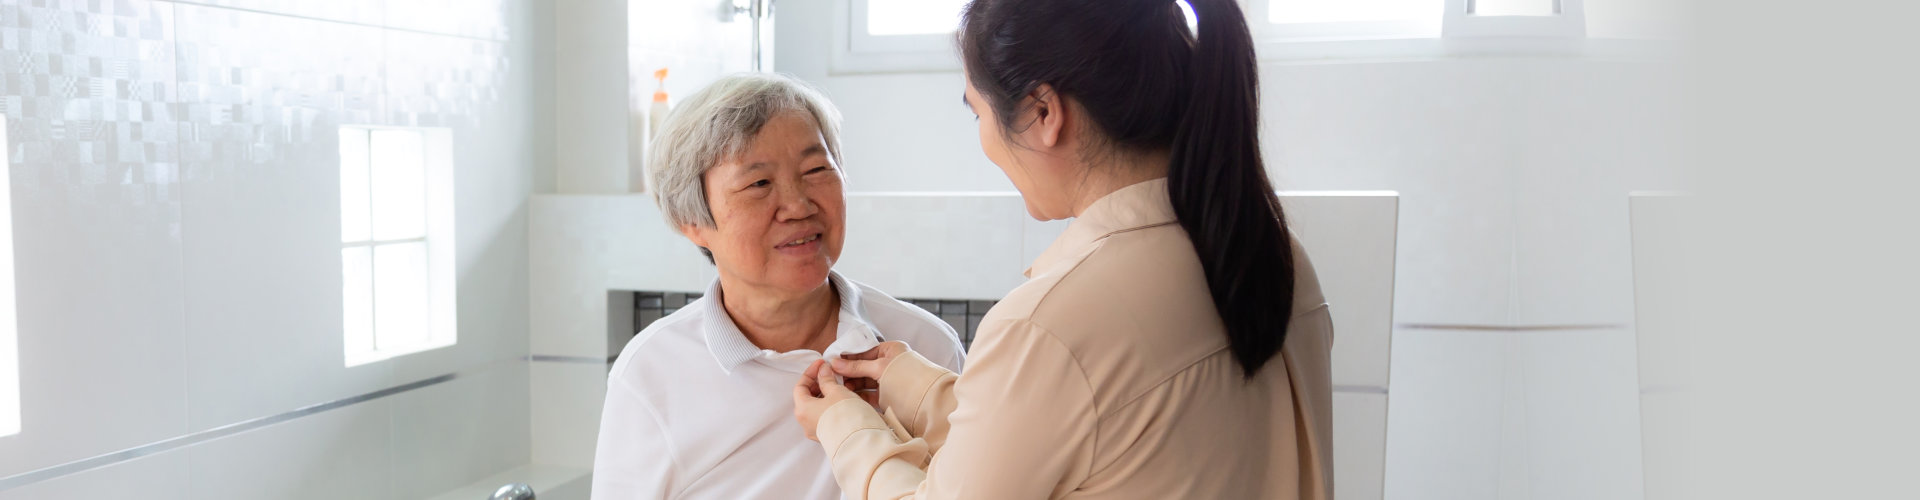 caregiver buttoning patient's shirt